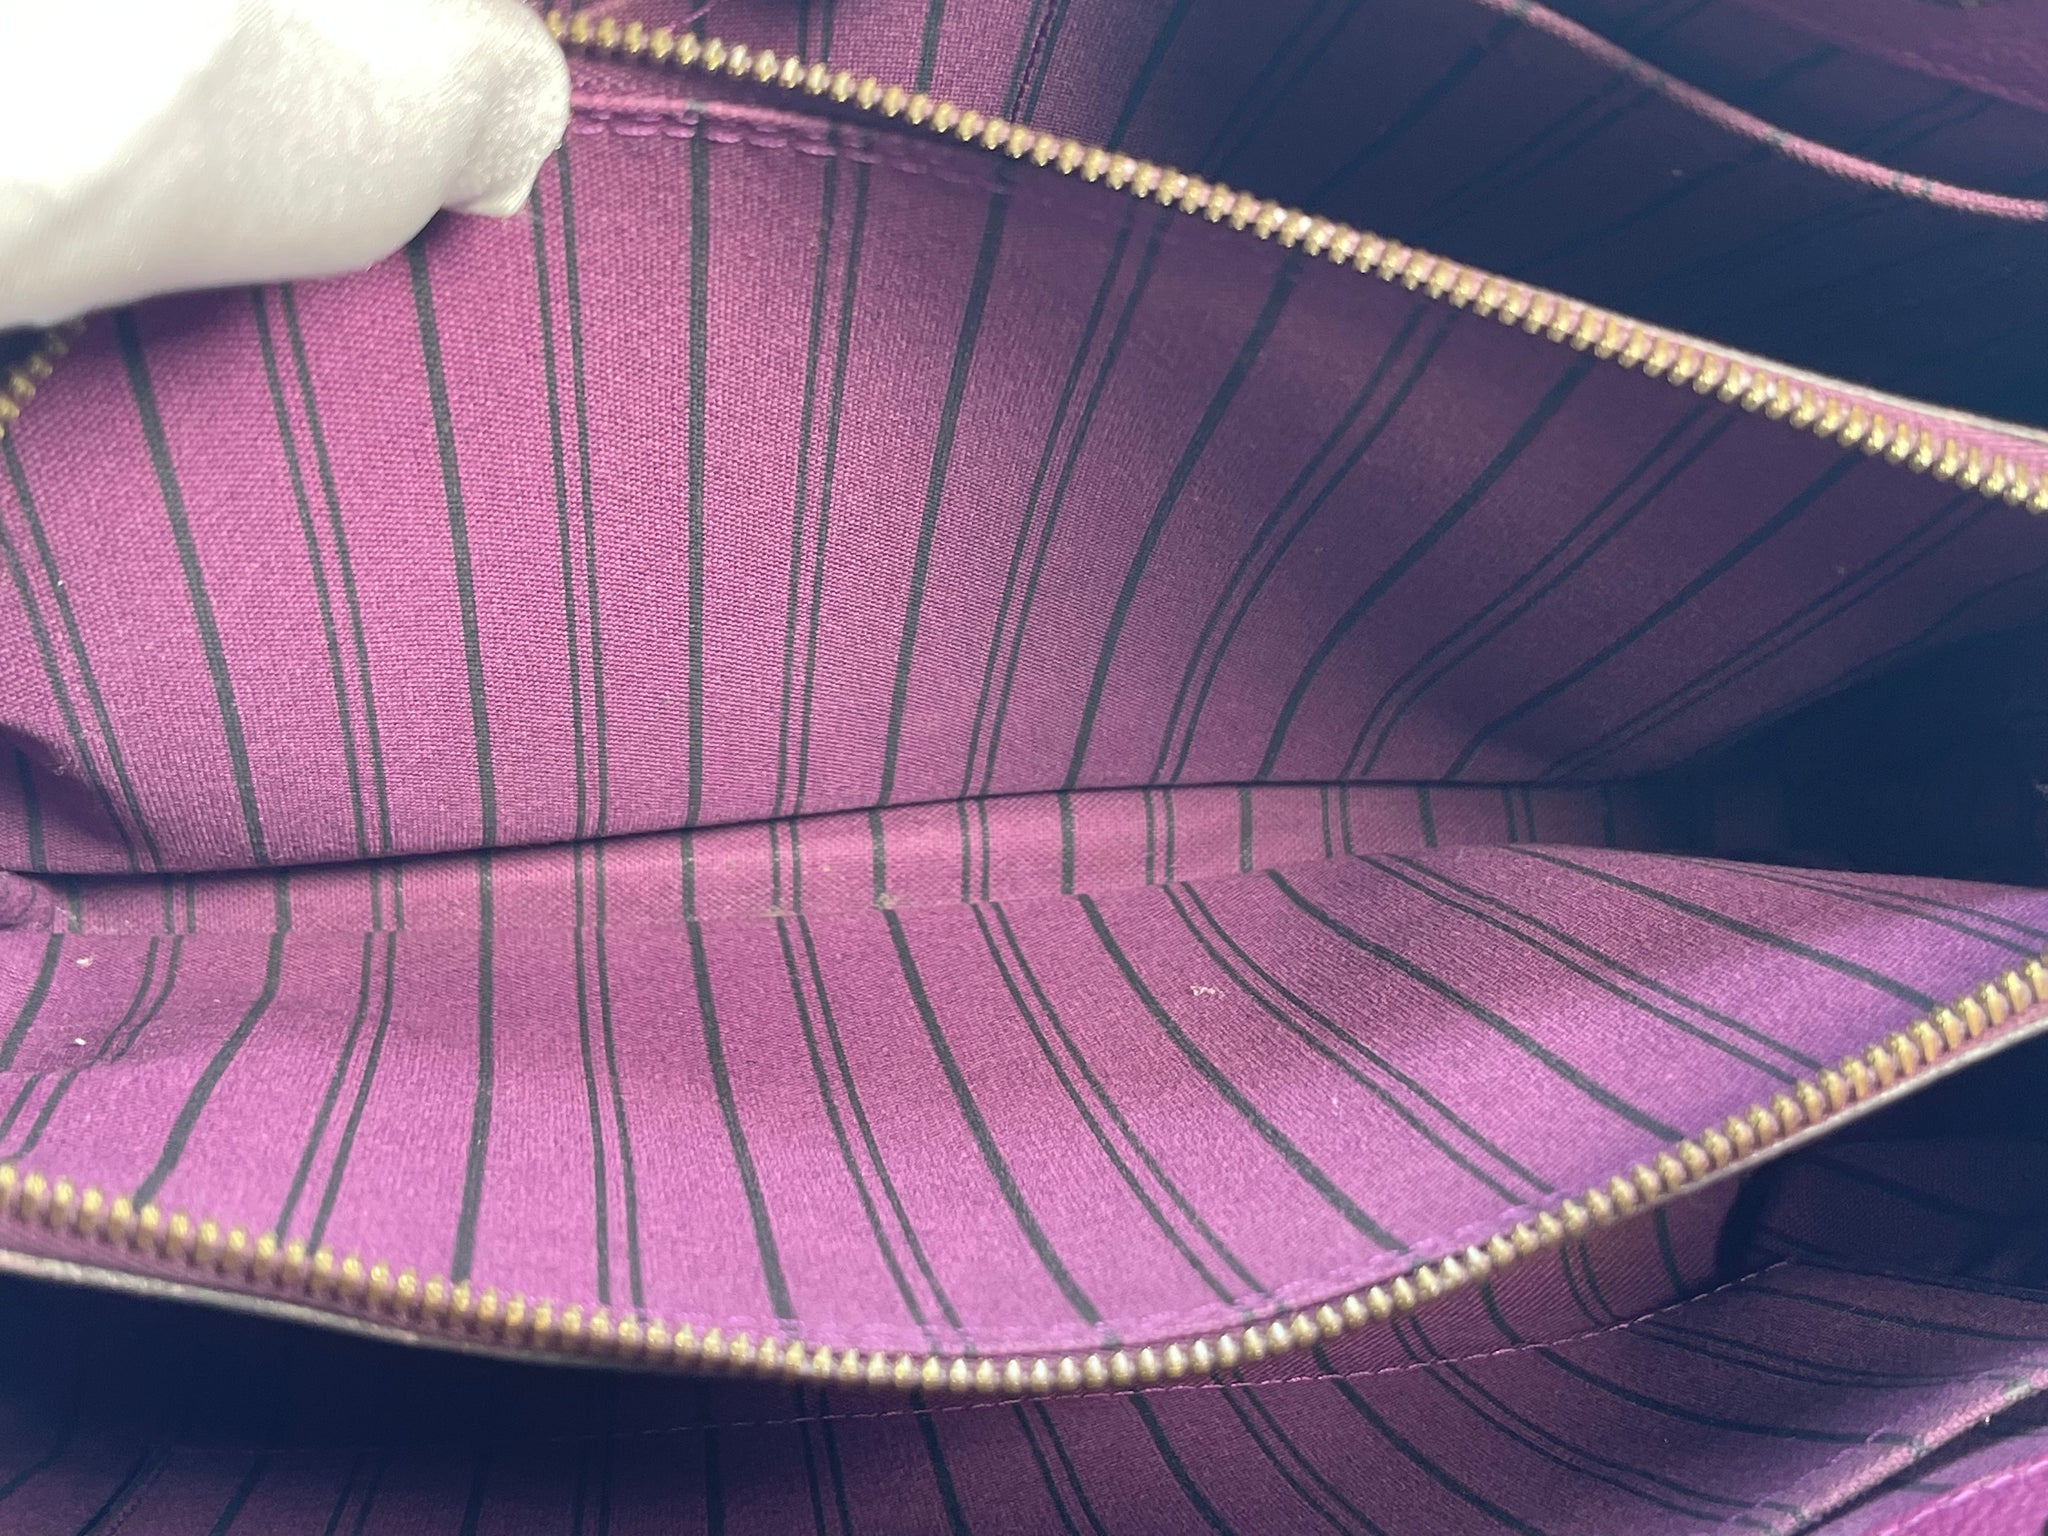 PRELOVED Louis Vuitton Montaigne MM Purple Empriente Monogram Leather Handbag  SP5103 102022